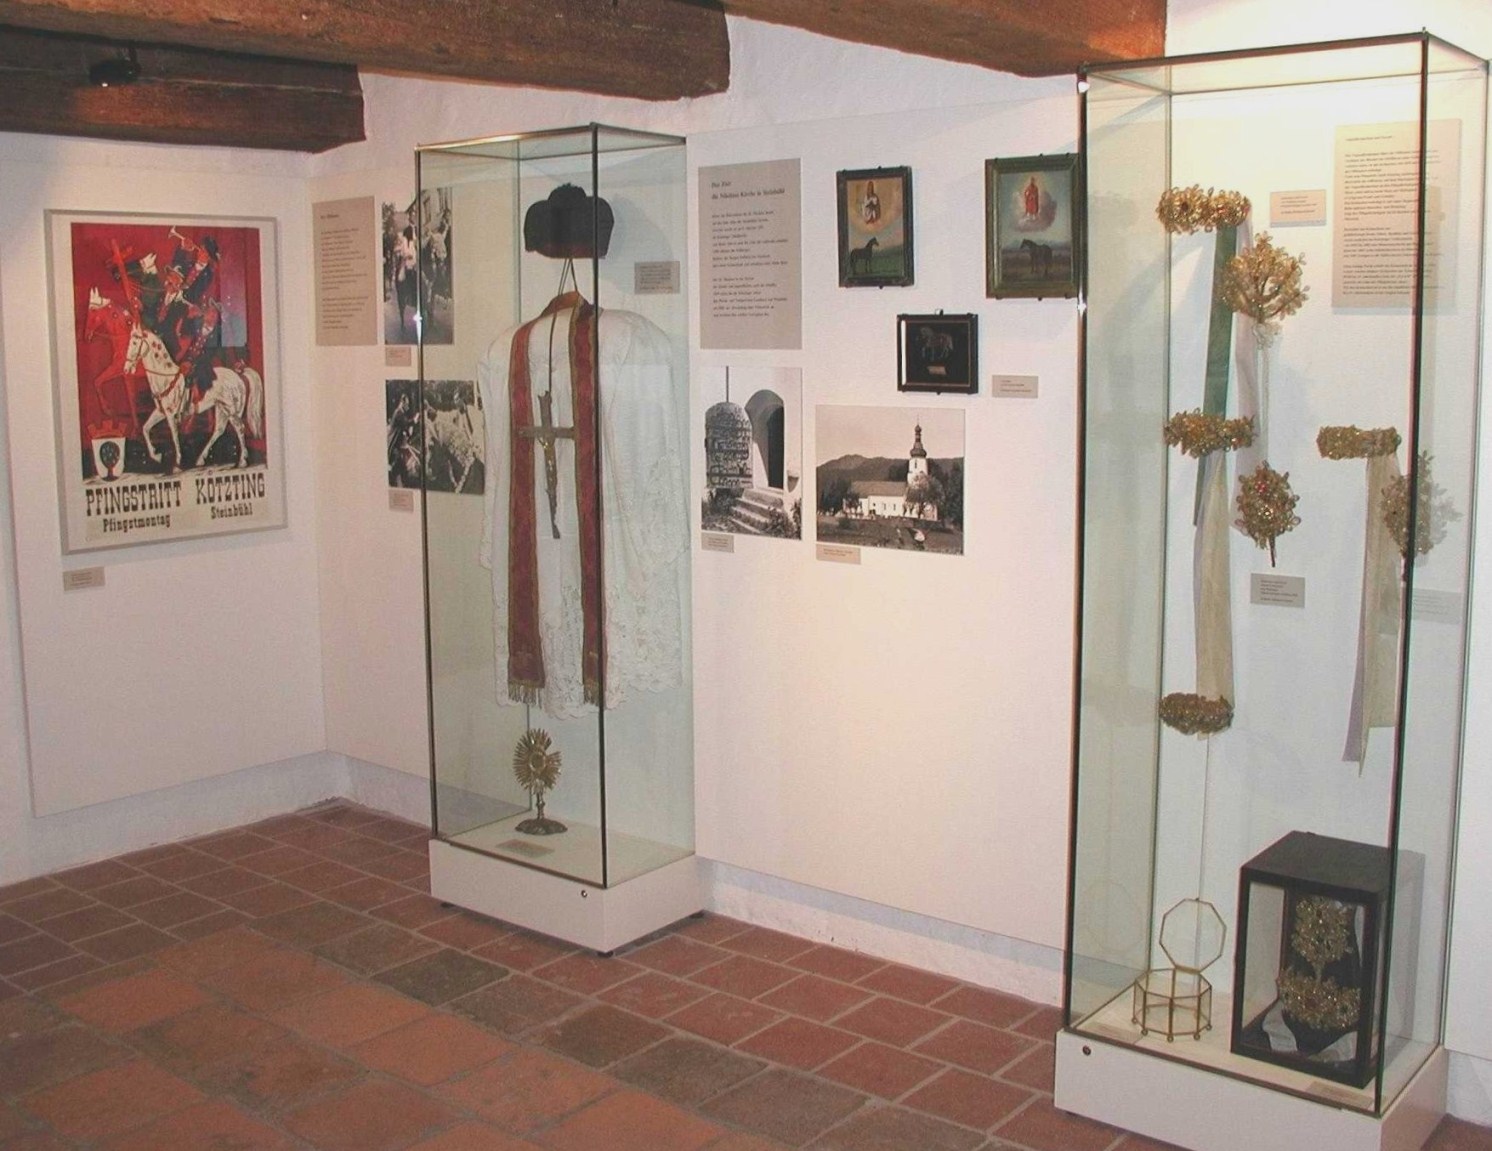 Pfingstrittmuseum Bad Kötzting, Innenansicht